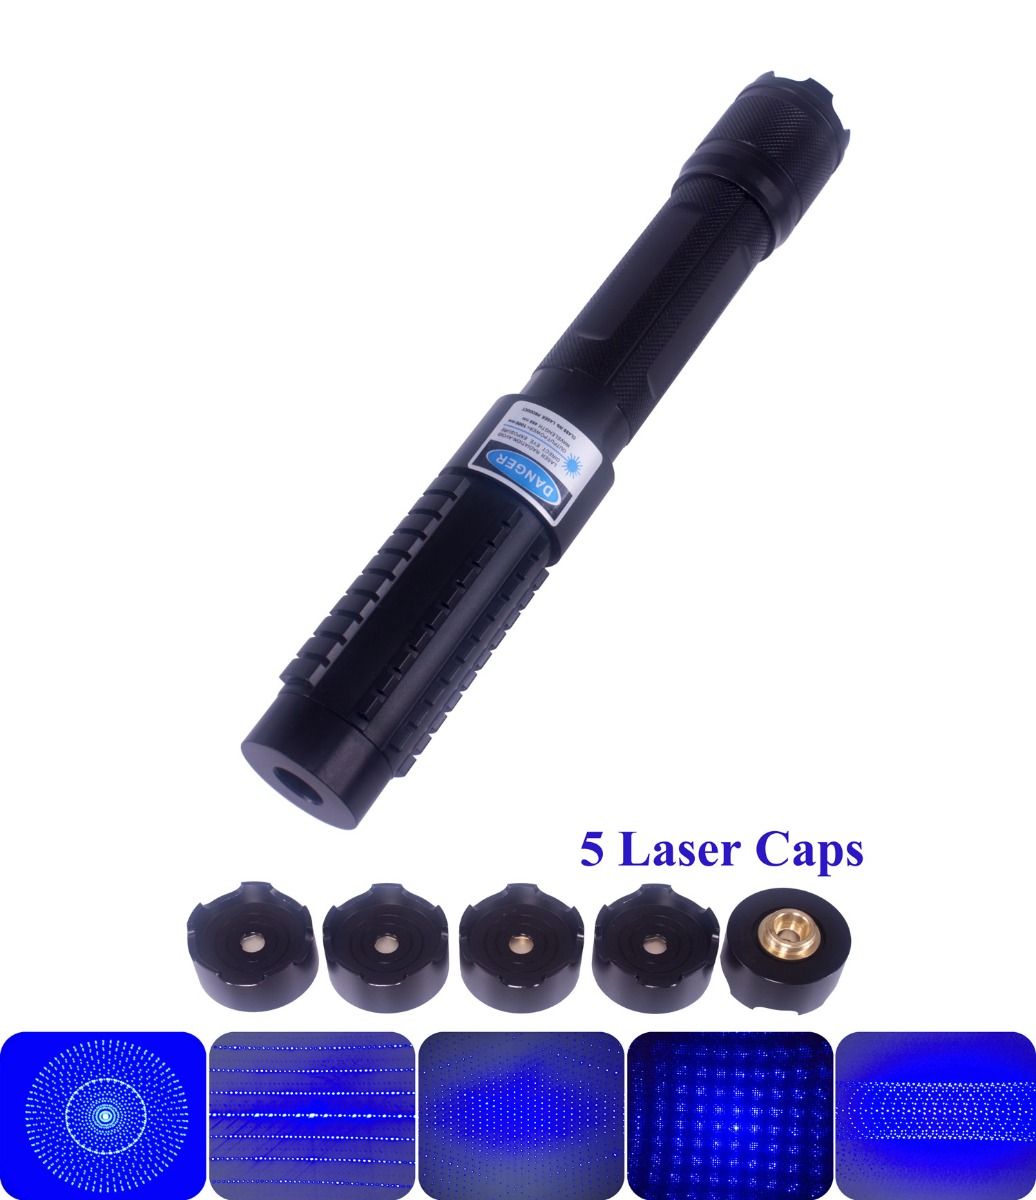 405nm 5mw Powerful Visible Beam Blue Focus Burning Laser Pointer Pen Light ON US